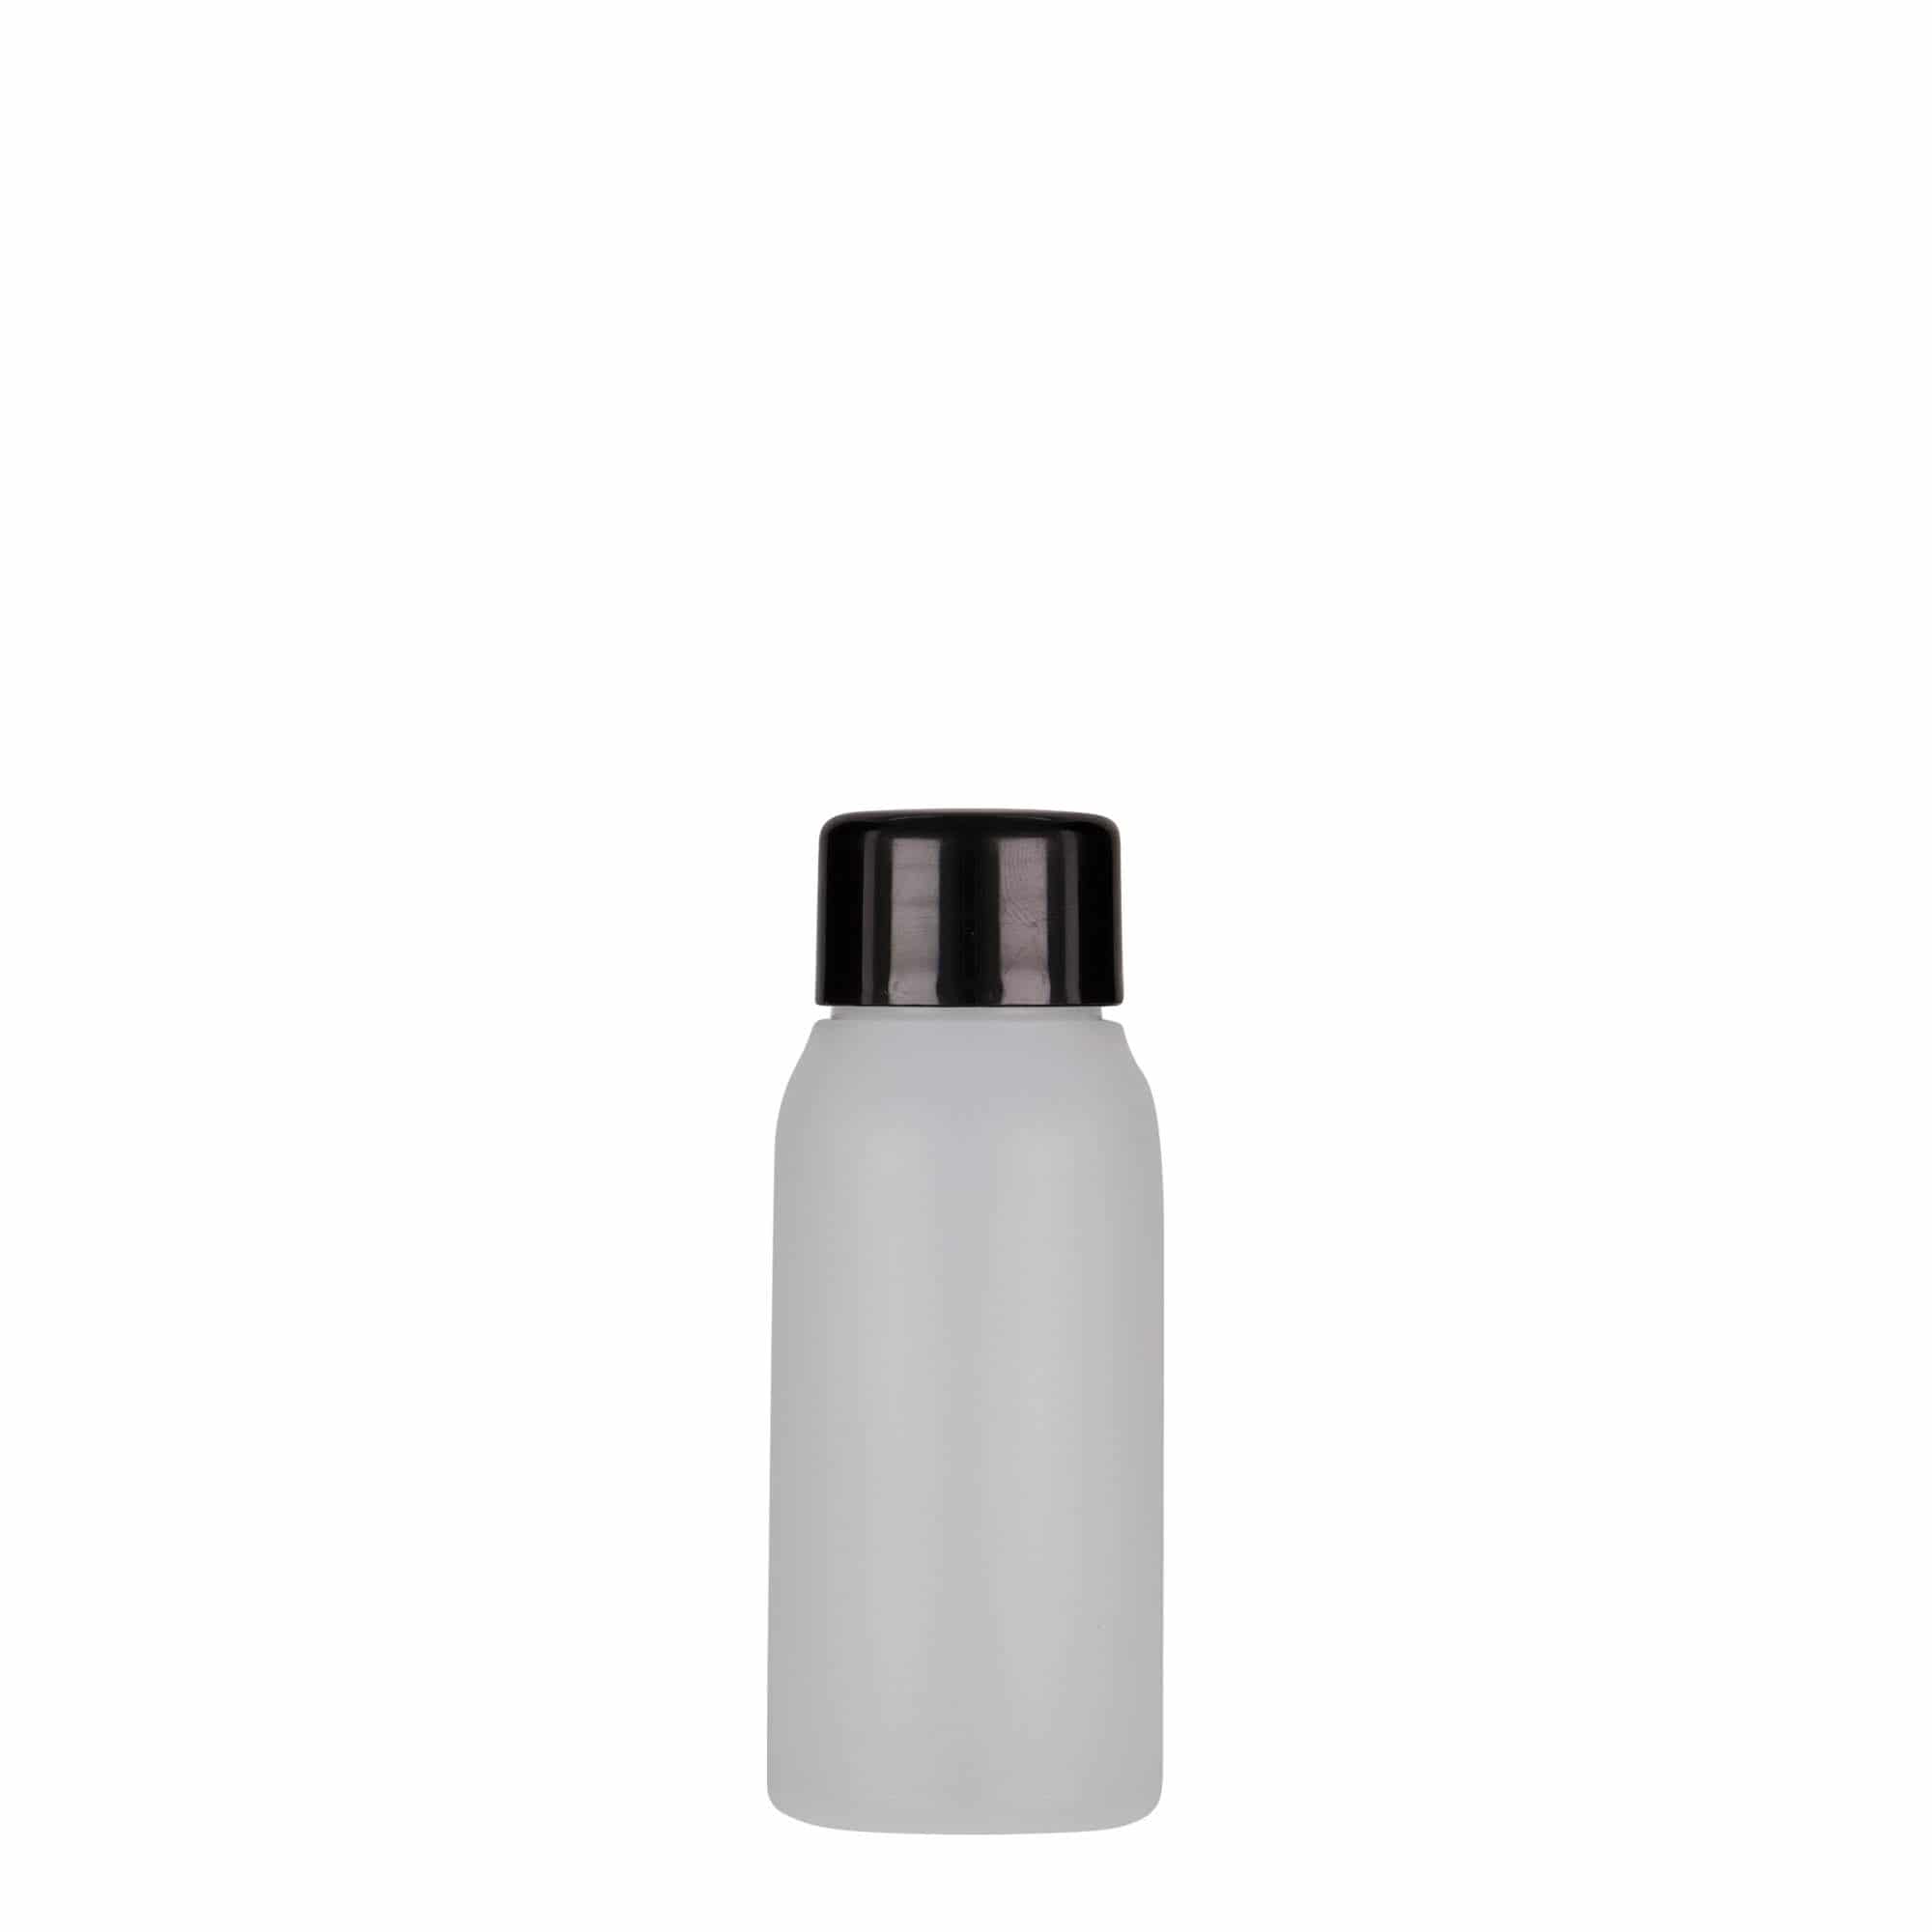 50 ml plastic bottle 'Tuffy', HDPE, natural, closure: GPI 24/410